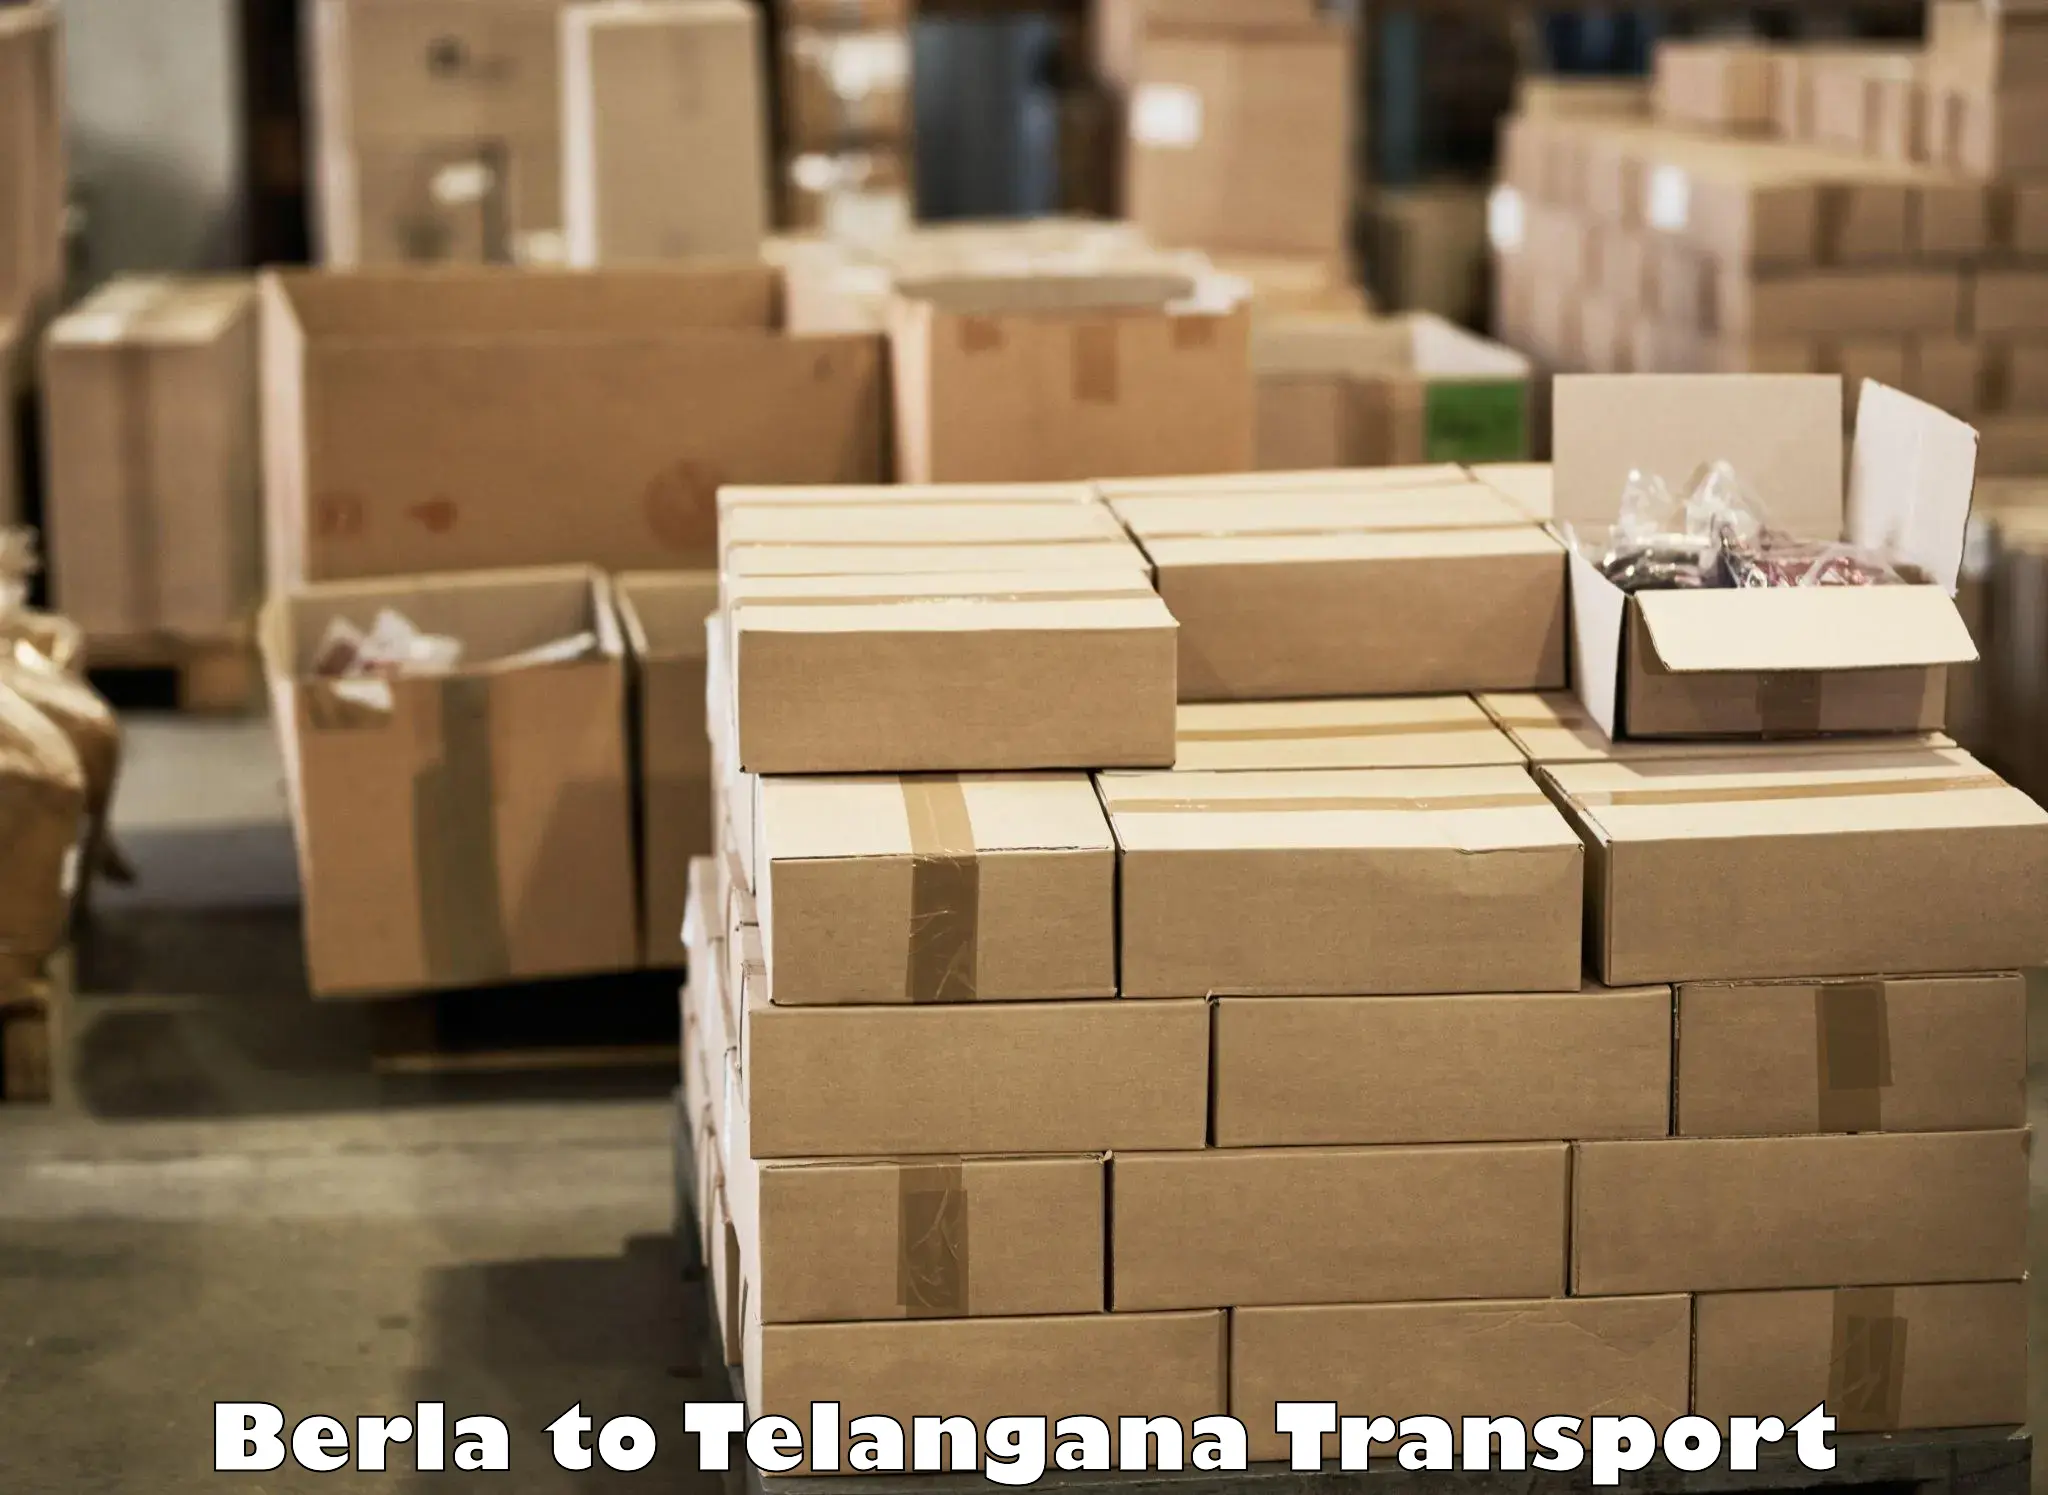 Transport in sharing Berla to Sikanderguda